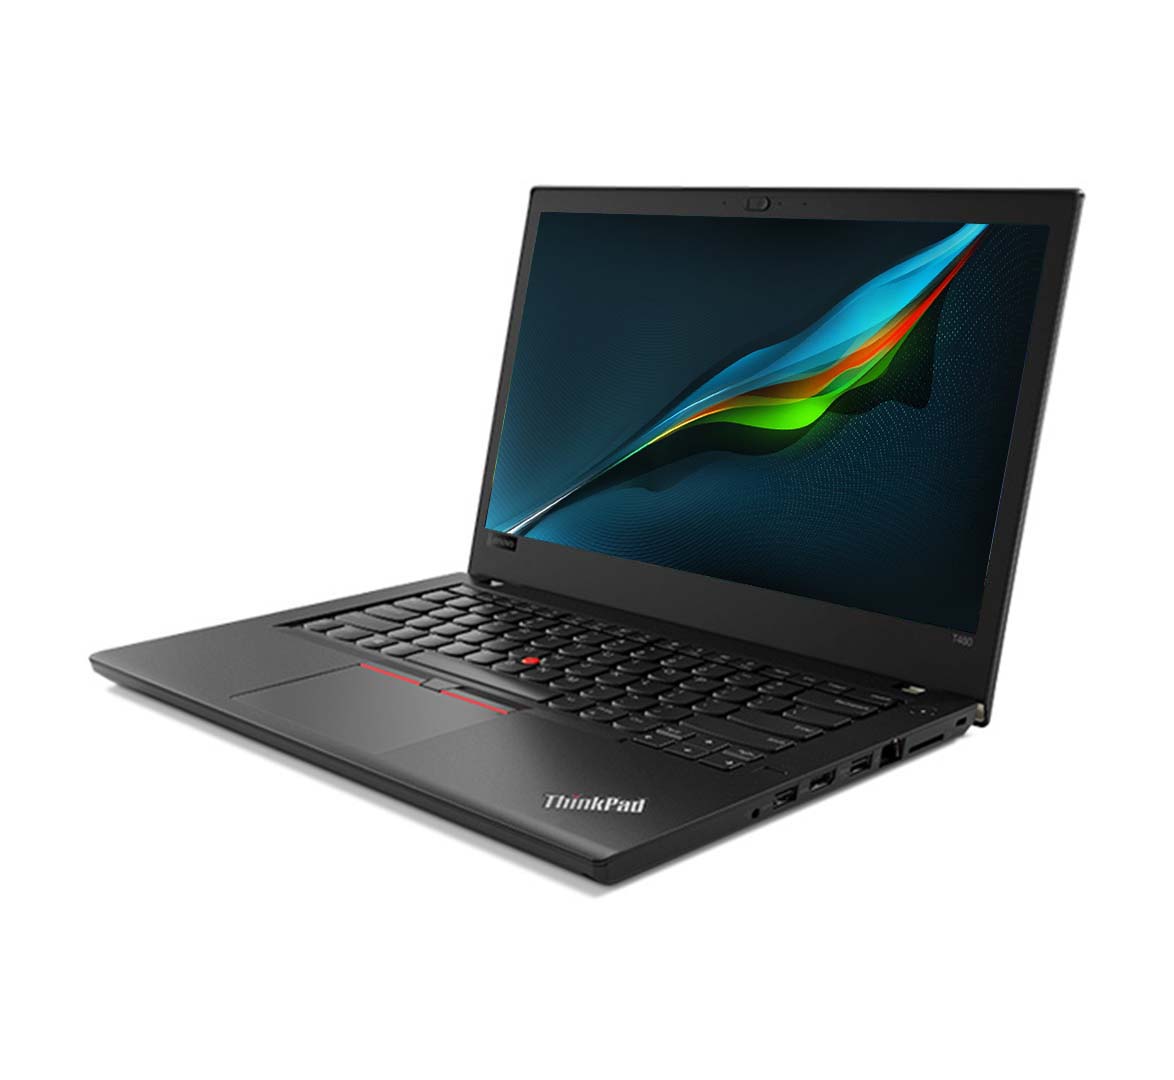 Lenovo Thinkpad T480 Business Laptop, Intel Core i5-8th Generation CPU, 8GB RAM, 256GB SSD, 14 inch Display, Windows 10 Pro